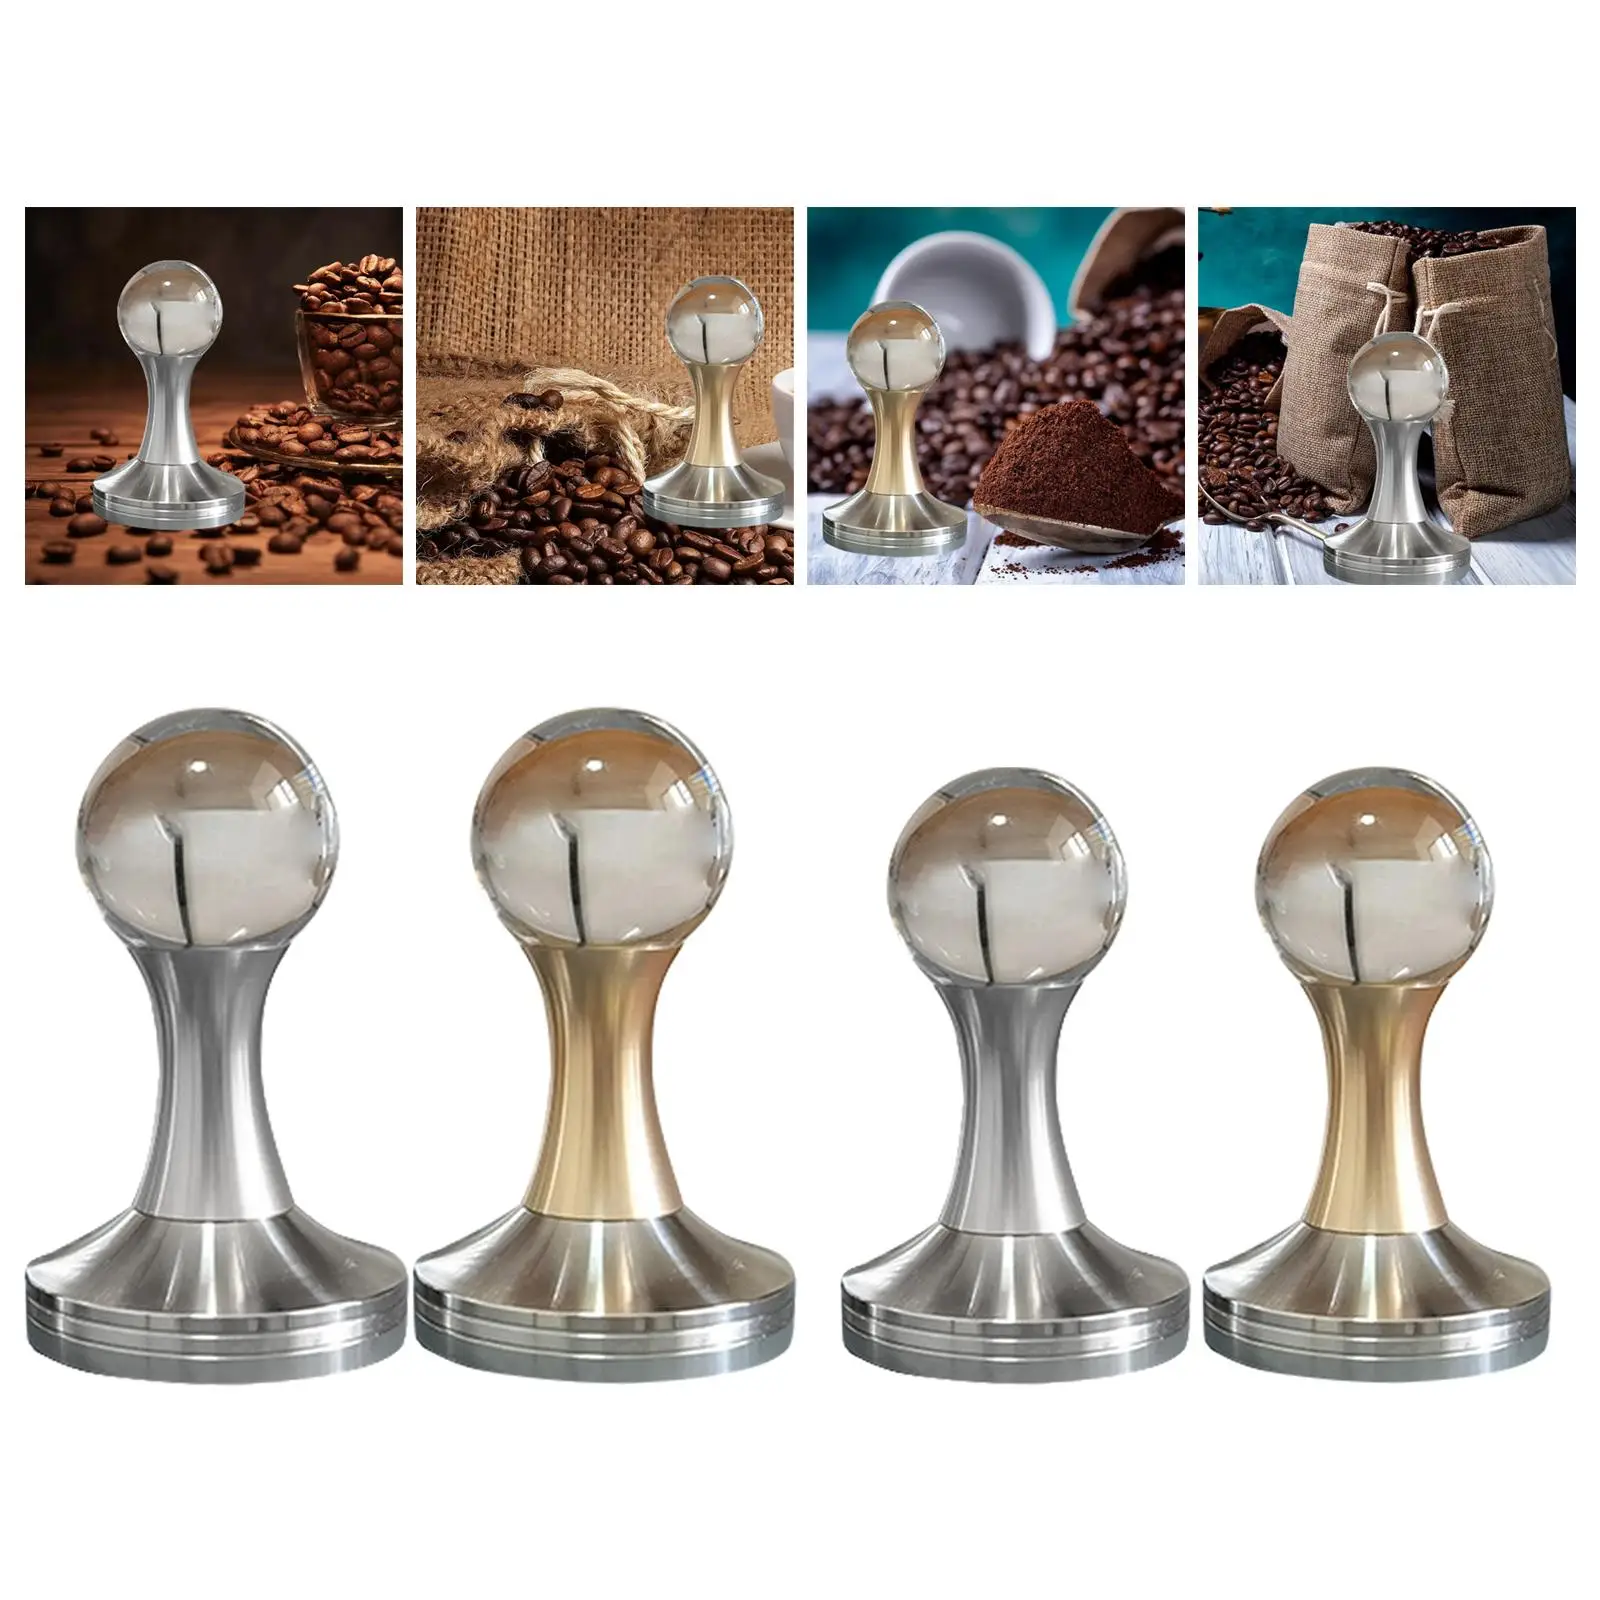 Professional Coffee Tamper Grind Tamper Espresso Espresso Distribution Tool for Restaurants Gift